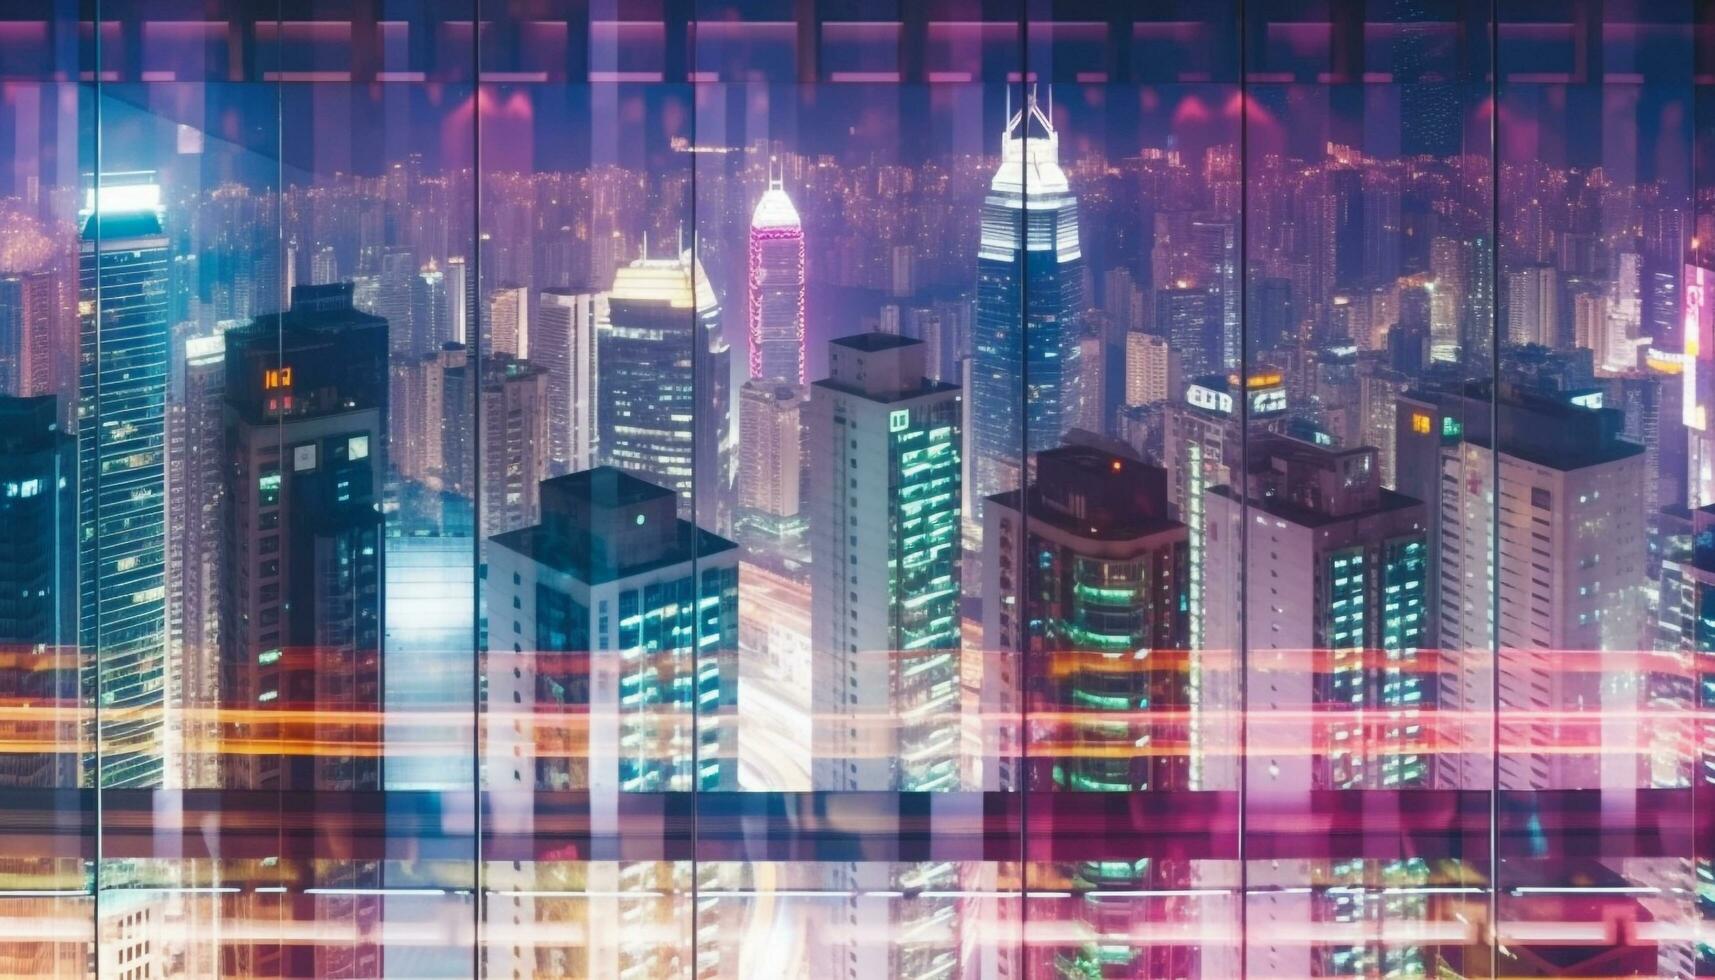 verlichte wolkenkrabbers gloed in de futuristische stadsgezicht Bij schemer gegenereerd door ai foto